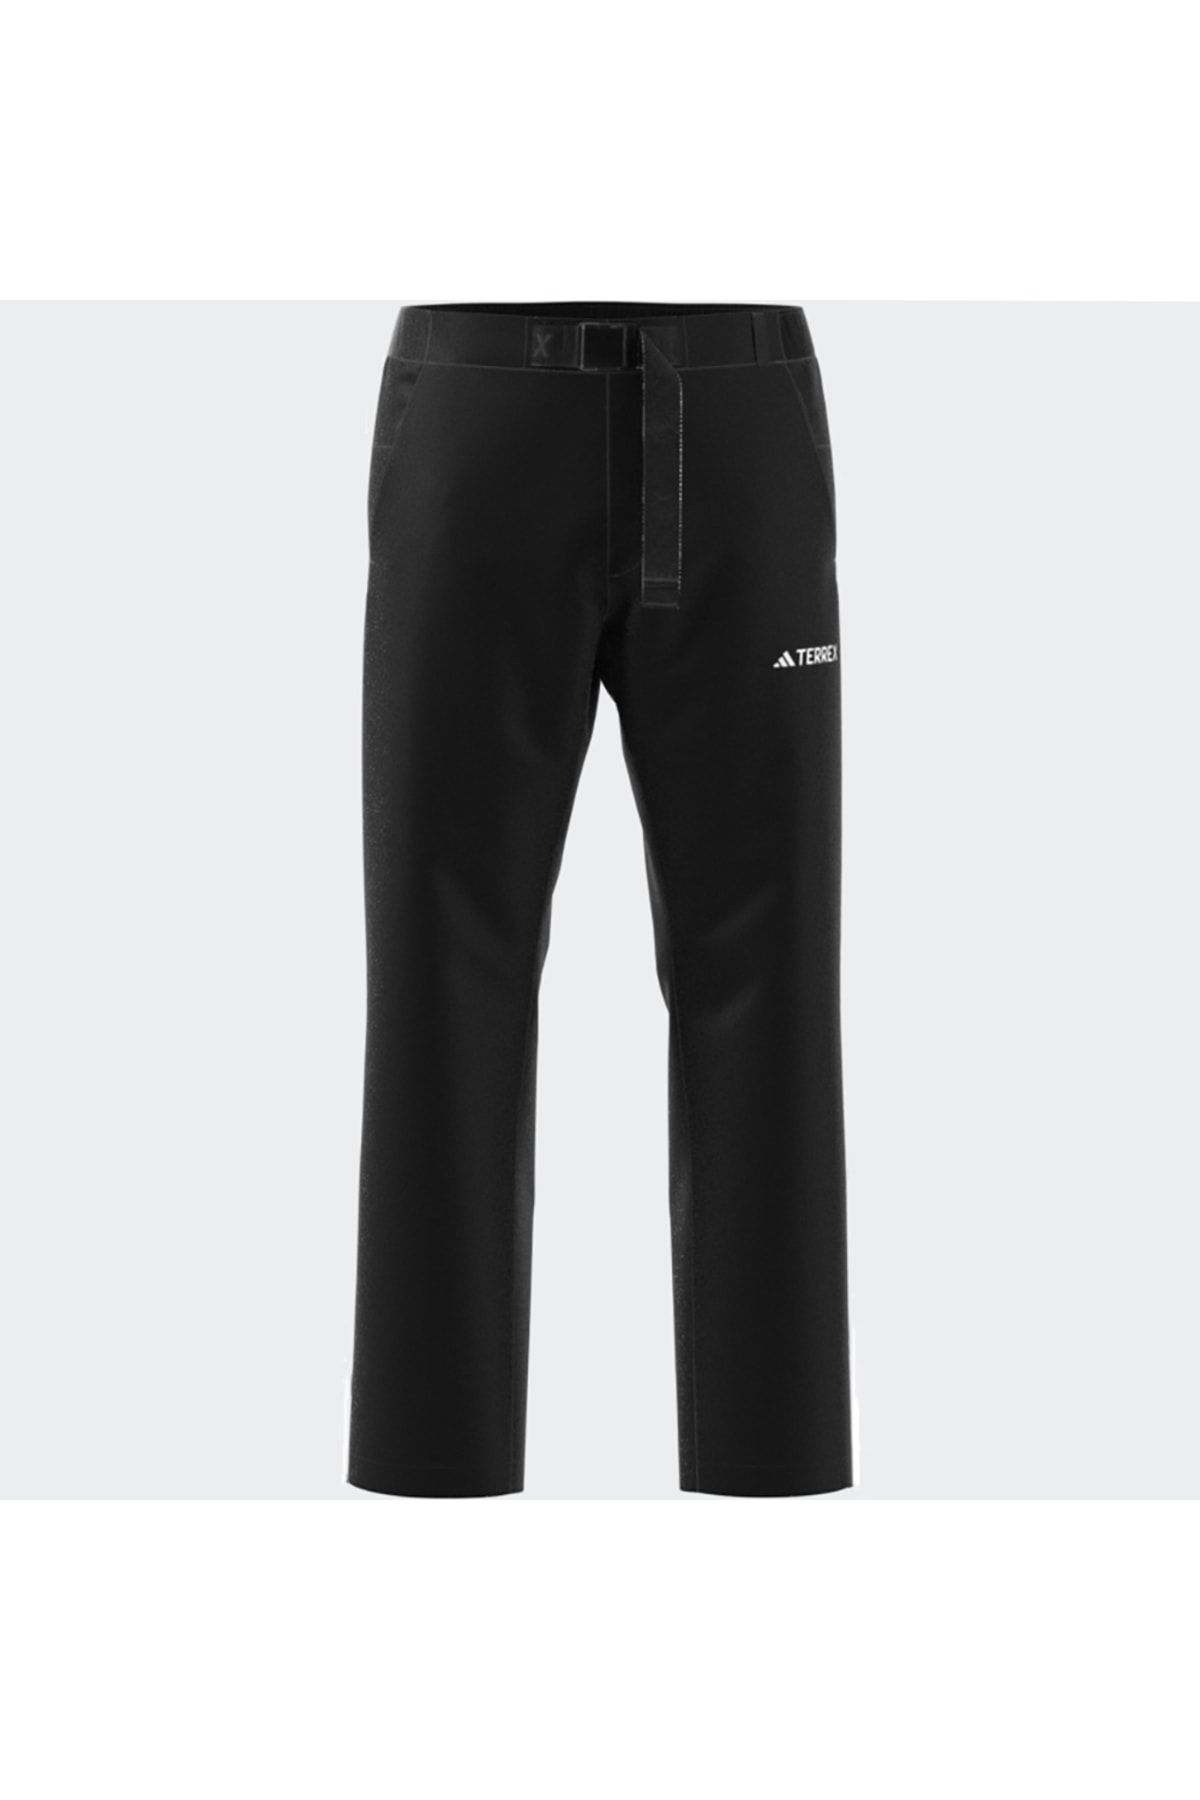 adidas Terrex Brushed Erkek Siyah Outdoor Pantolon (ıc4403)